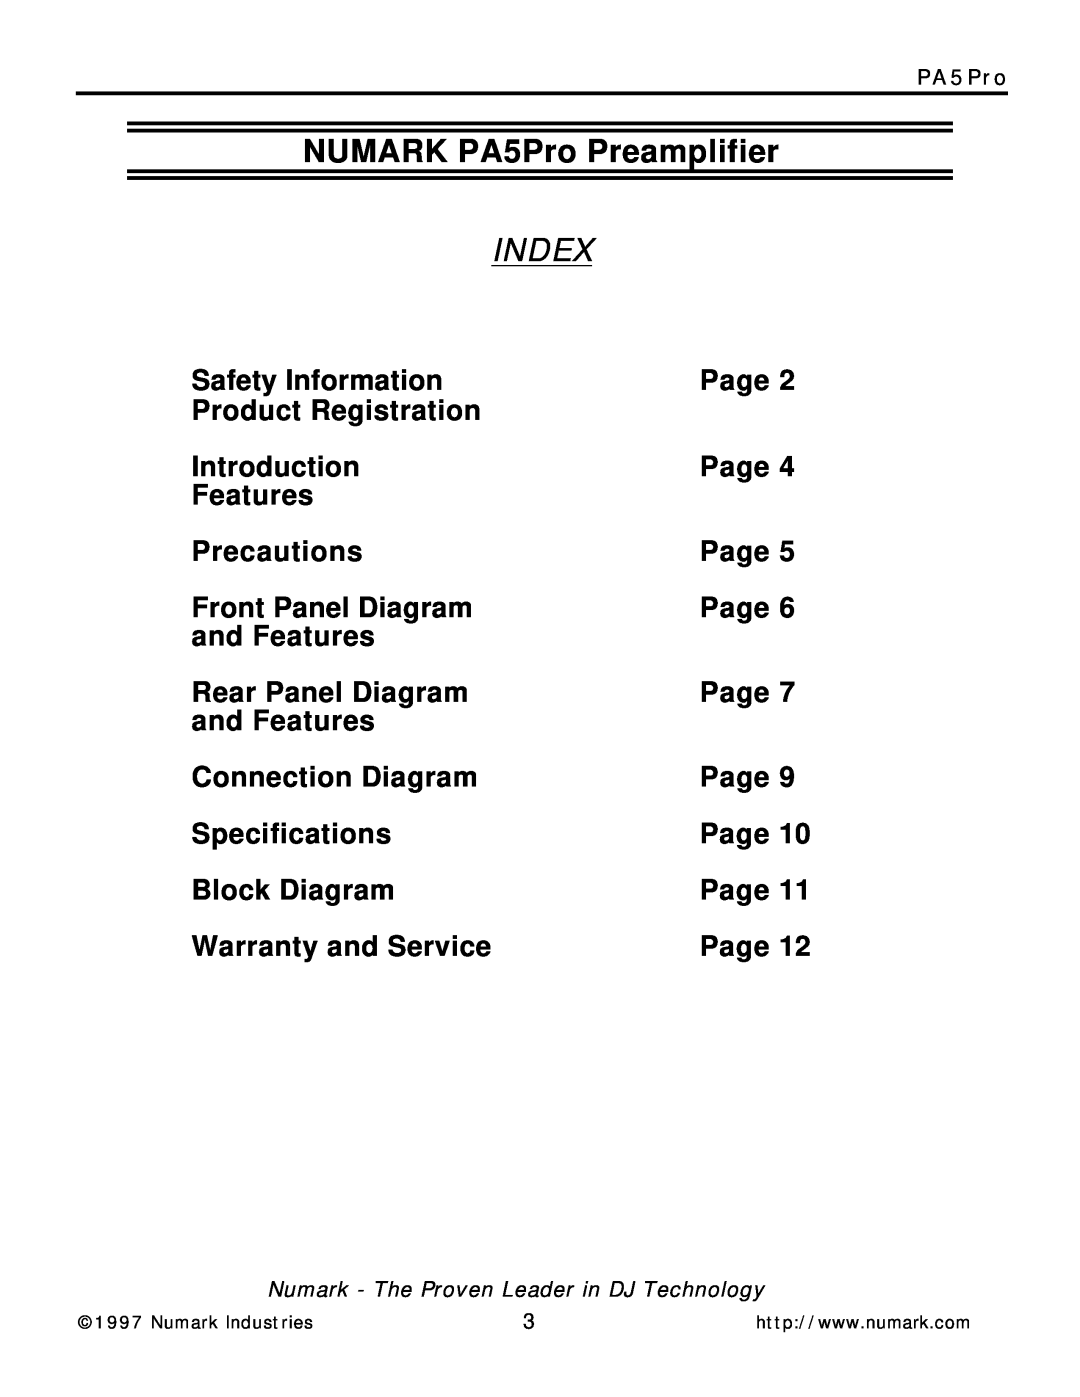 Numark Industries owner manual Index, NUMARK PA5Pro Preamplifier 